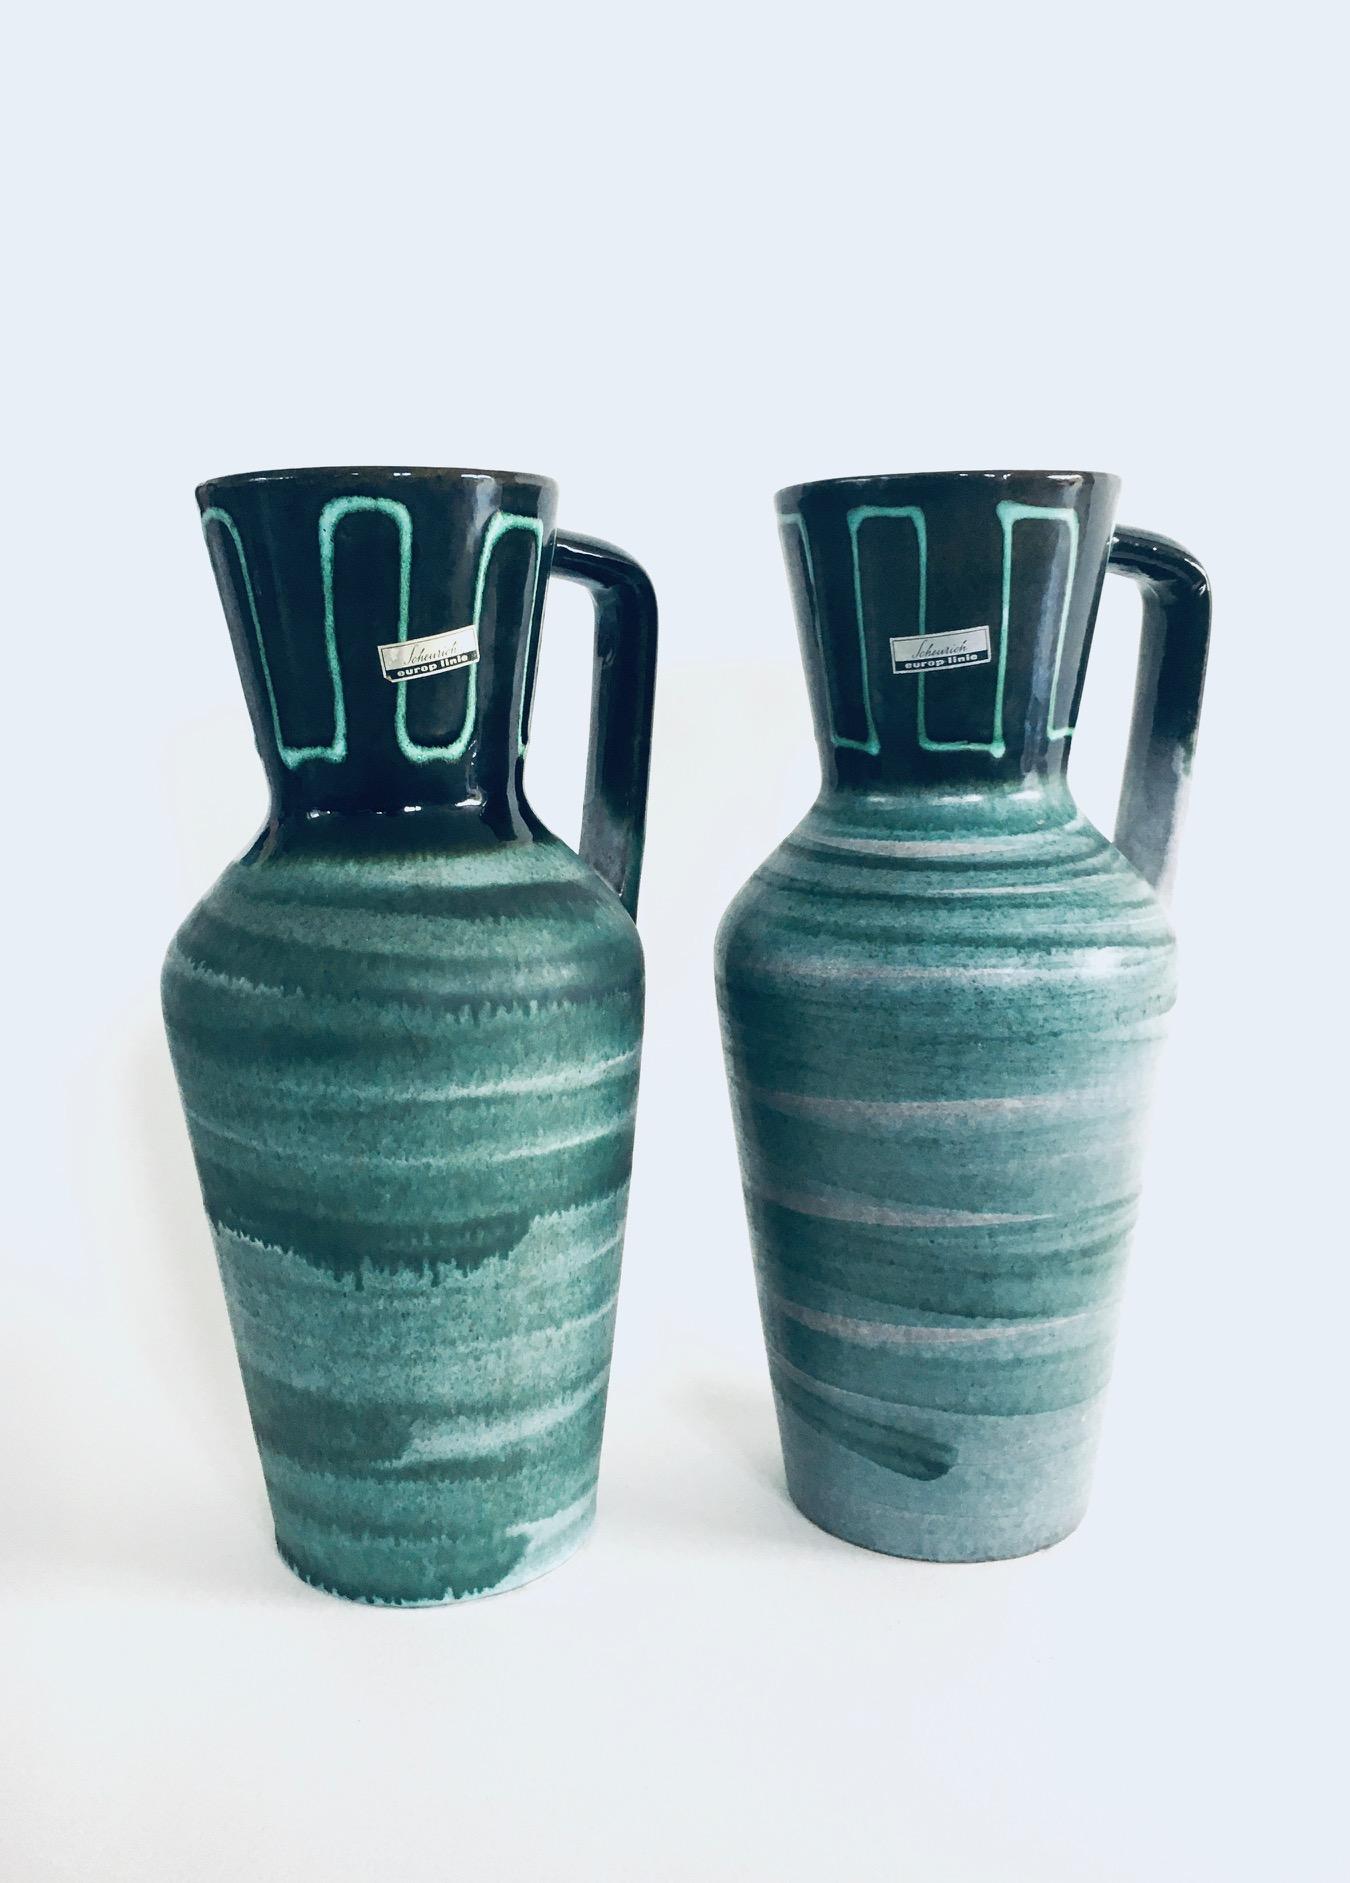 Vintage Midcentury Modern Art Studio Pottery Jug Vase set by Scheurich Europ Linie, West Germany 1960's. Model 407-35. Dark to light green glazed pot. In very good condition. Each vase measures 18cm x 15cm x 35cm. 
Sold as a set of 2